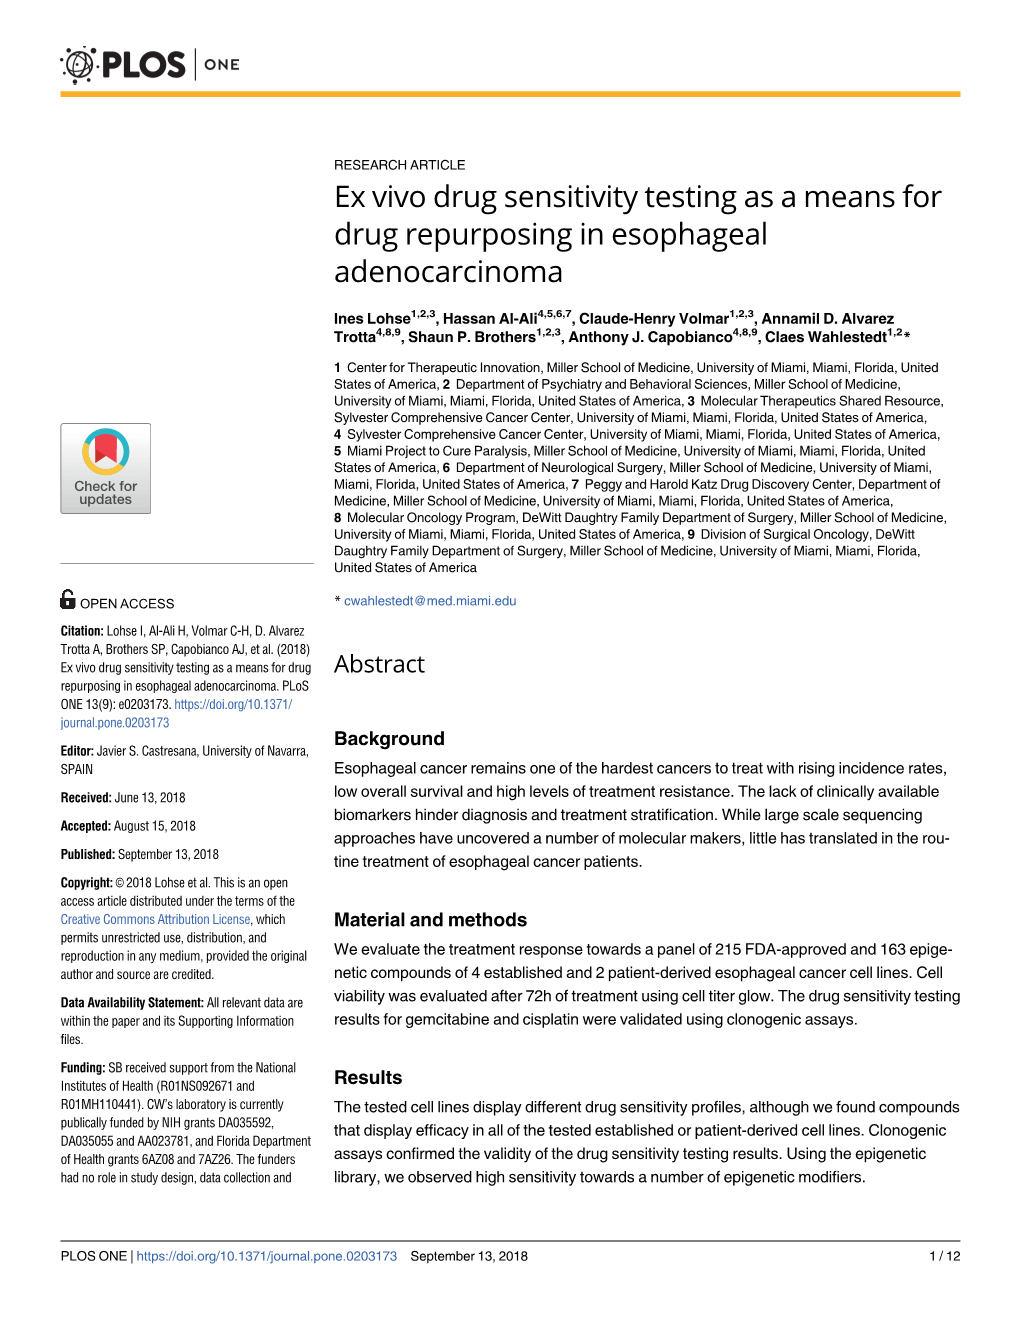 Ex Vivo Drug Sensitivity Testing As a Means for Drug Repurposing in Esophageal Adenocarcinoma